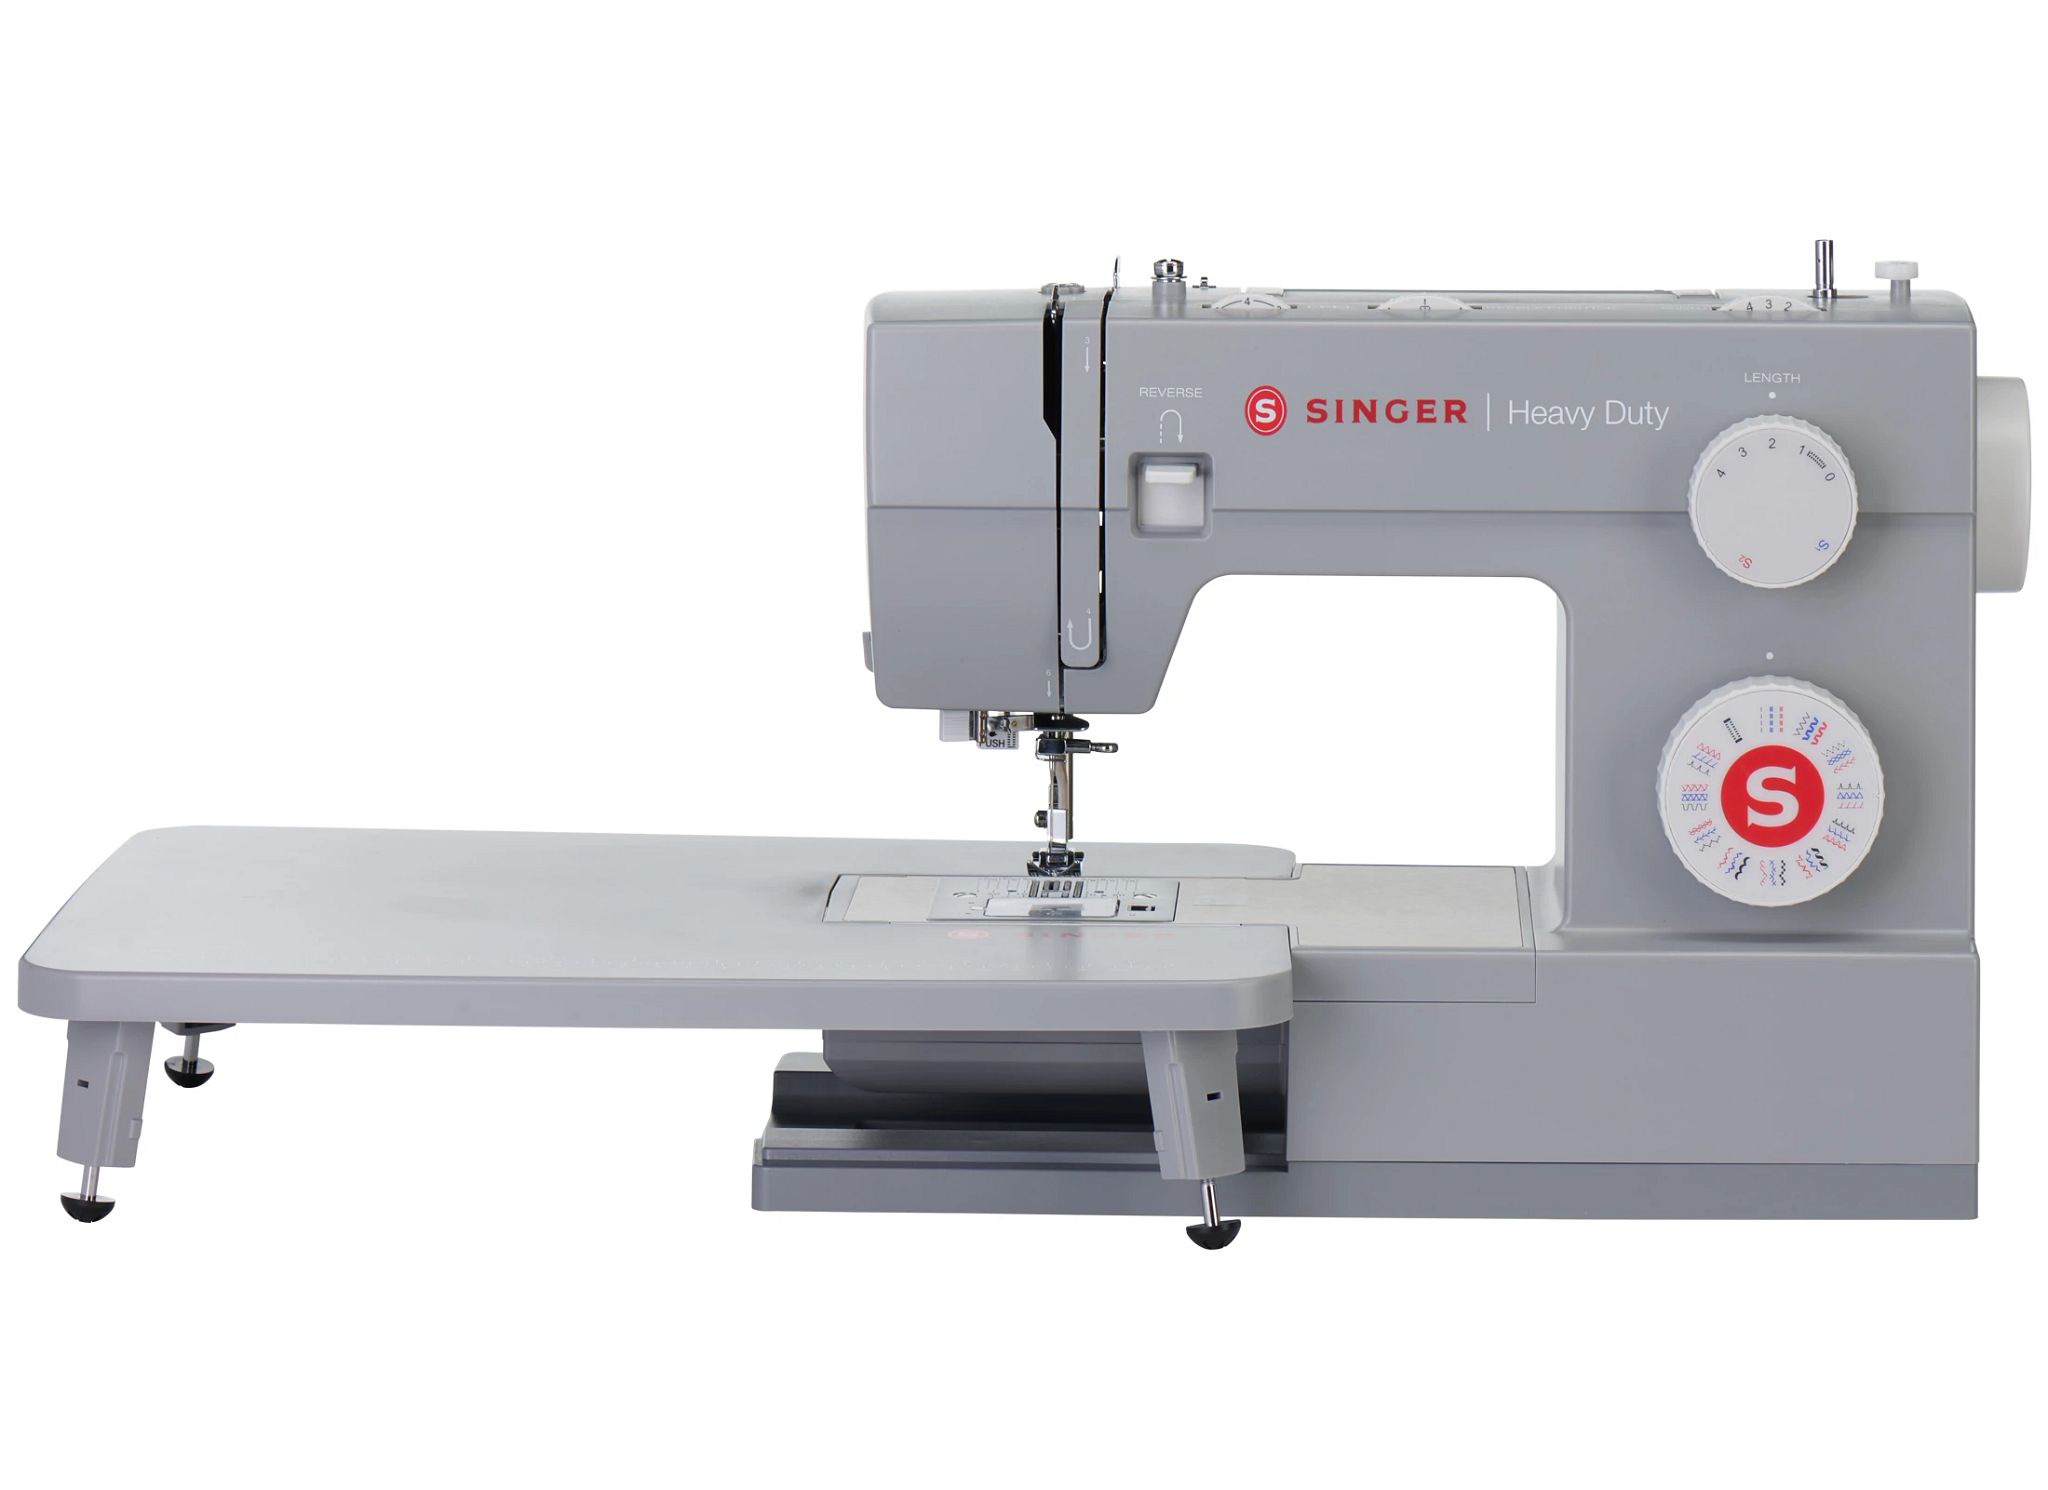 6380 heavy duty singer sewing machine